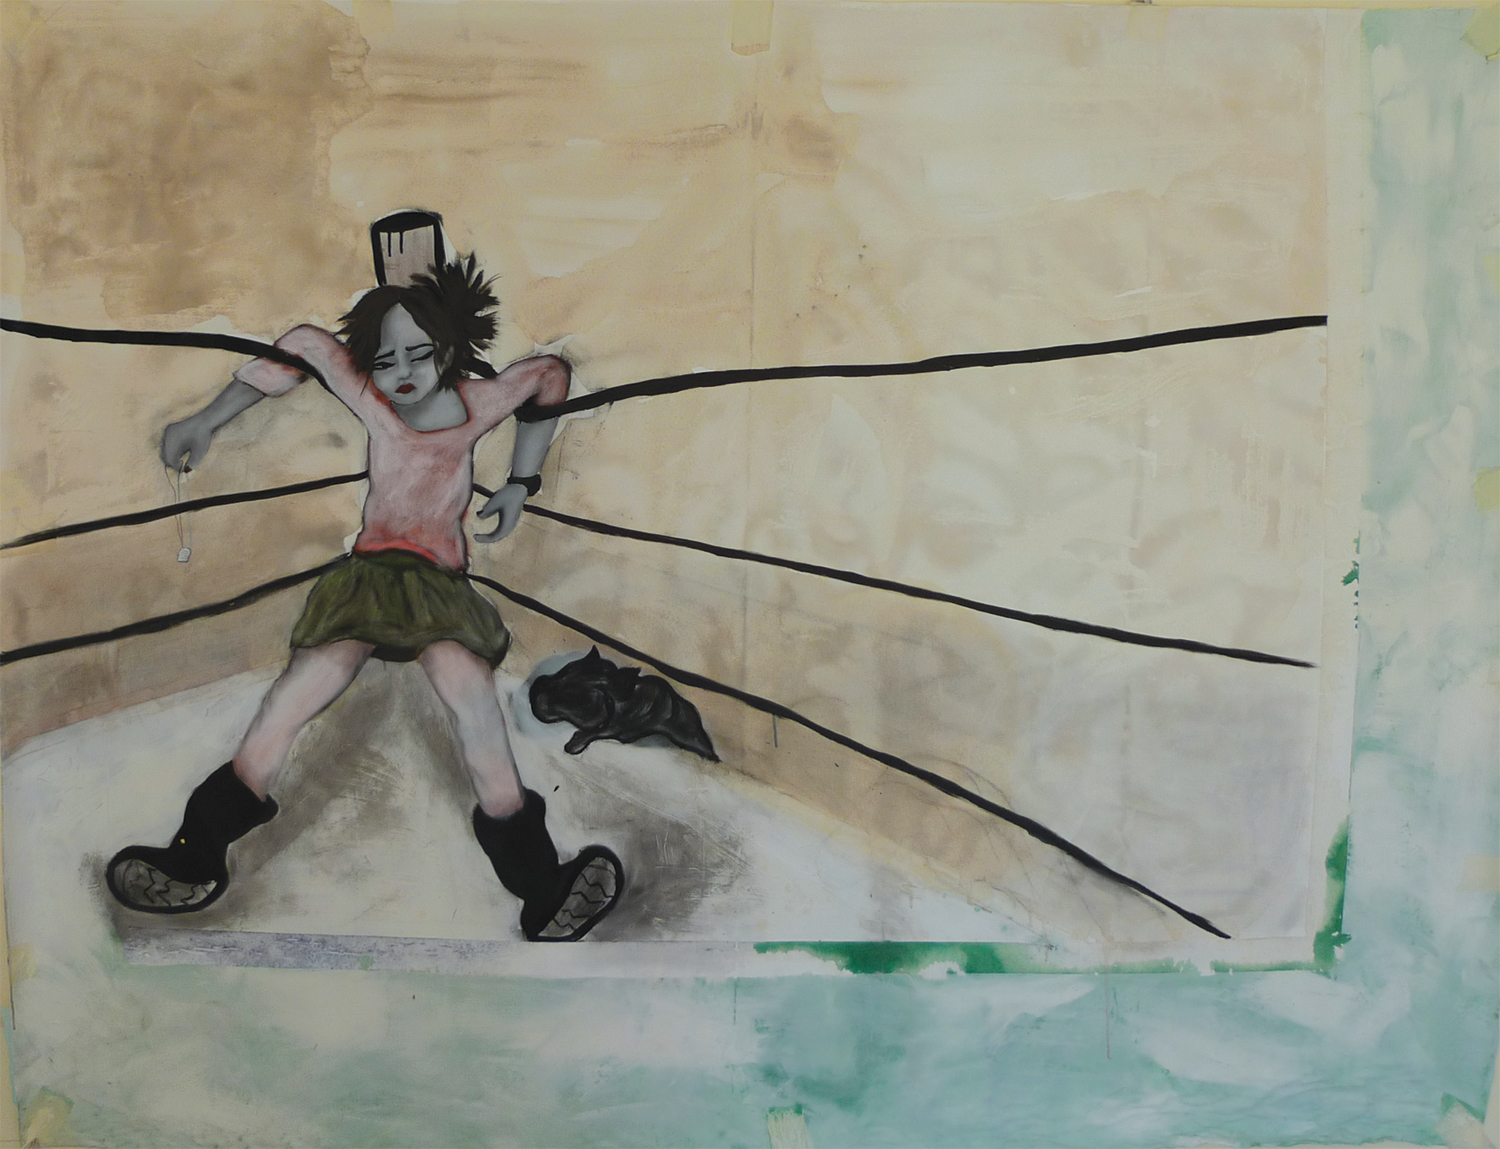   Knocked
Out, acrylic on canvas, 156 x 204 cm, 2009  






  
  
   
  
  

  
  
   Normal 
   0 
   
   
   
   
   false 
   false 
   false 
   
   EN-US 
   JA 
   X-NONE 
   
    
    
    
    
    
    
    
    
    
    
   
   
    
    